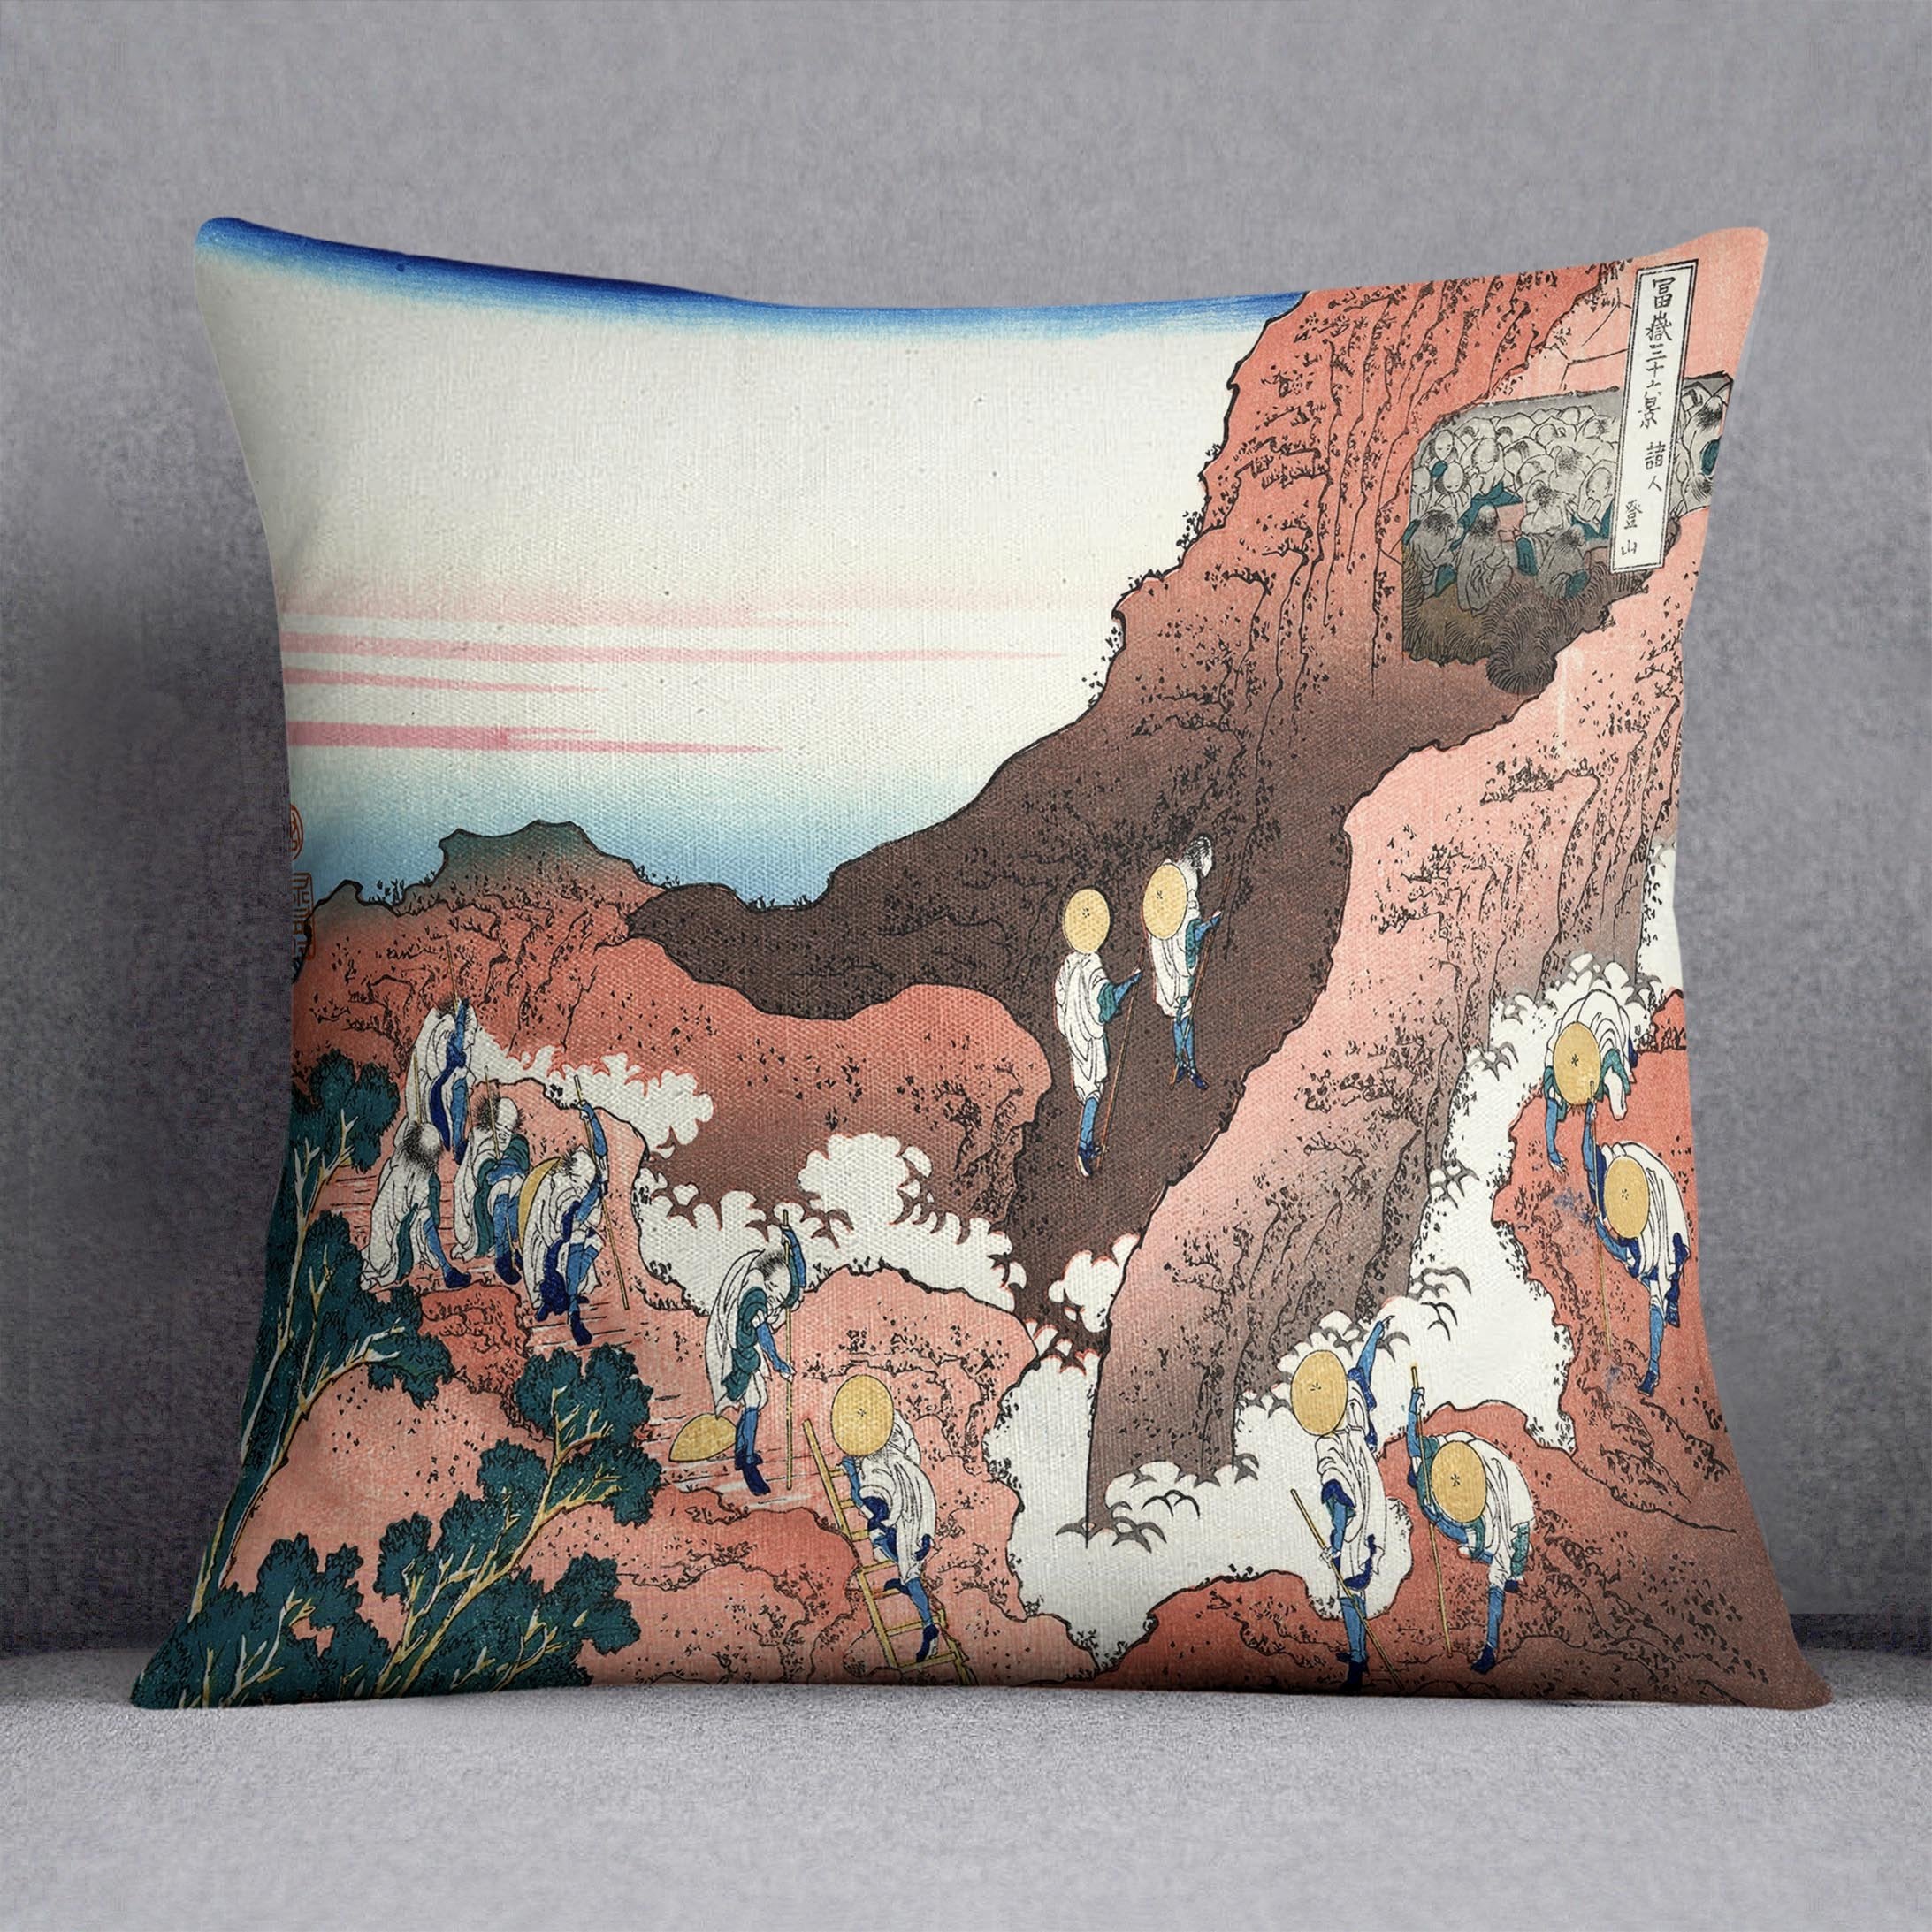 Climbing on Mt. Fuji by Hokusai Throw Pillow